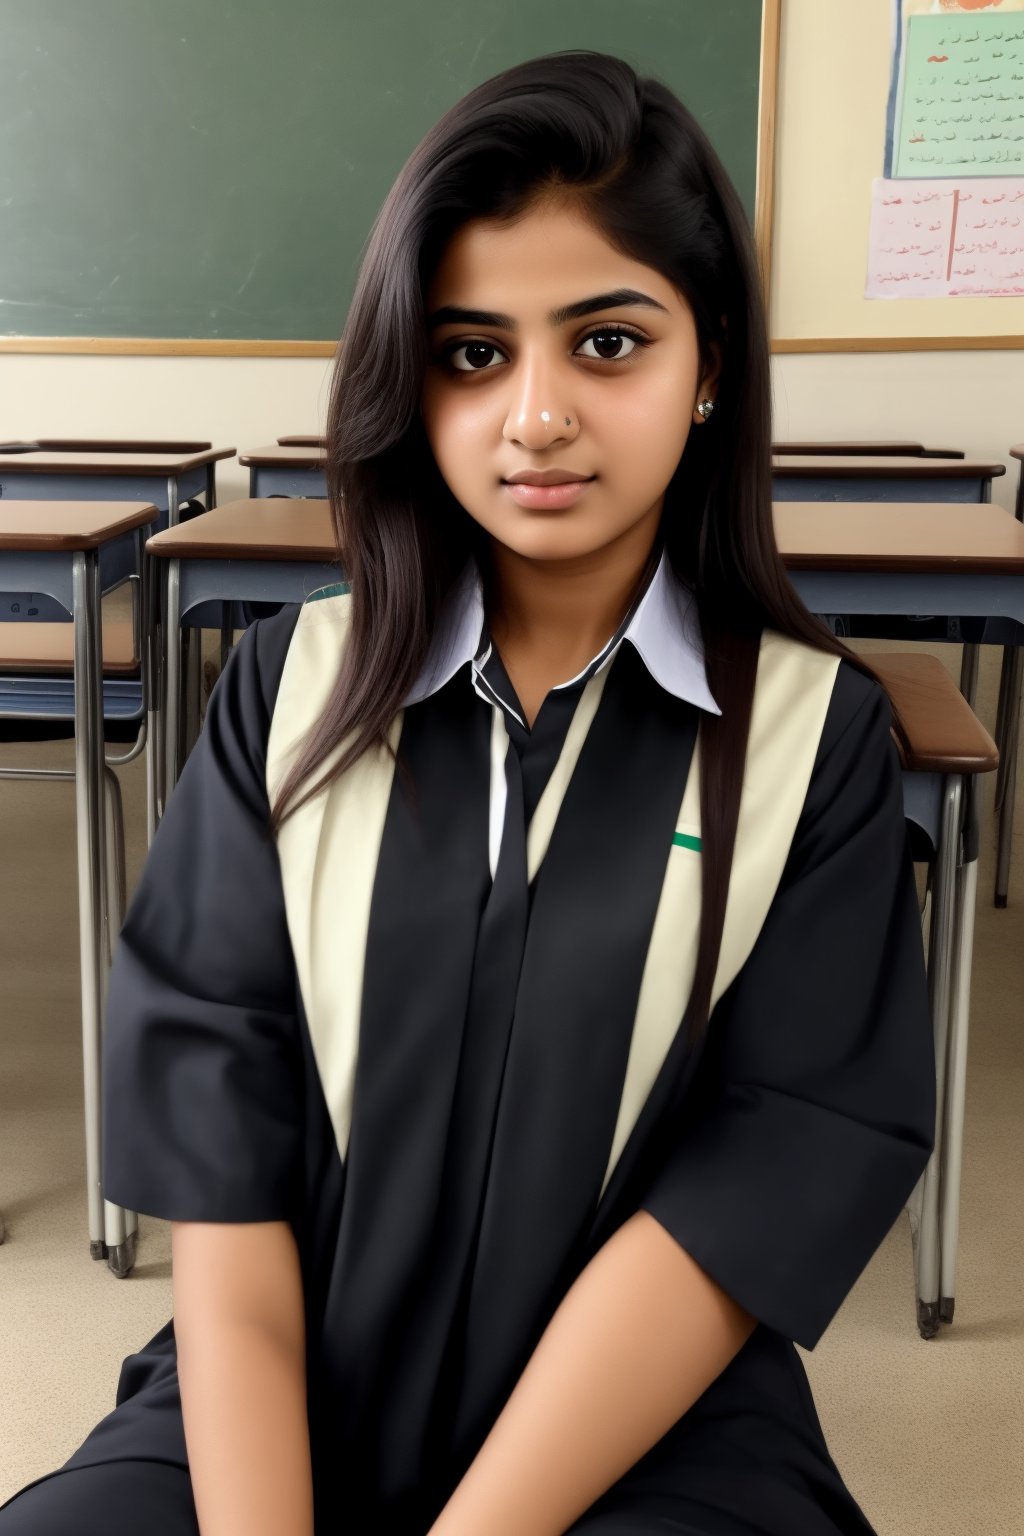 Pakistani girl 20 year old, innocent face, confused, black hair, black eyes sitting in school wearing University Uniform